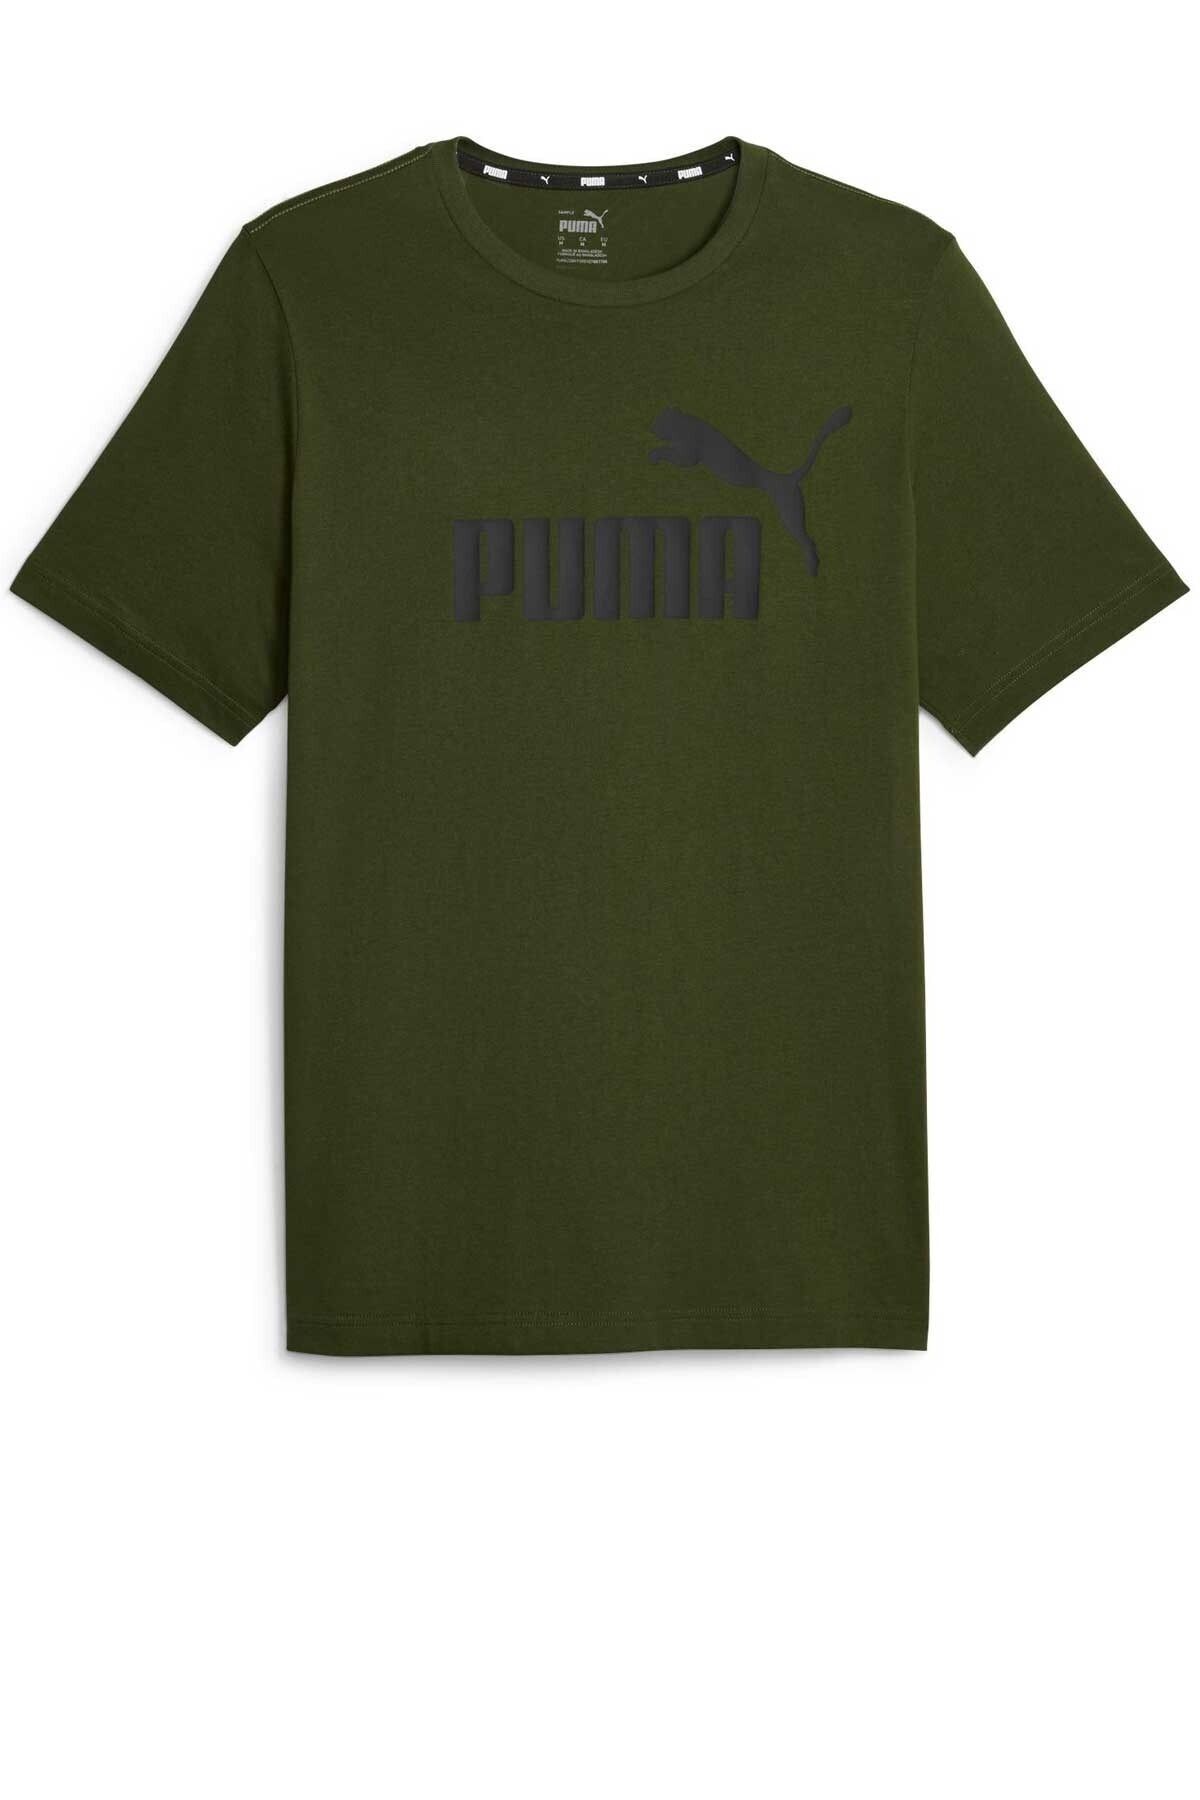 Puma Ess Logo Men's T-Shirt 58666731 - Trendyol